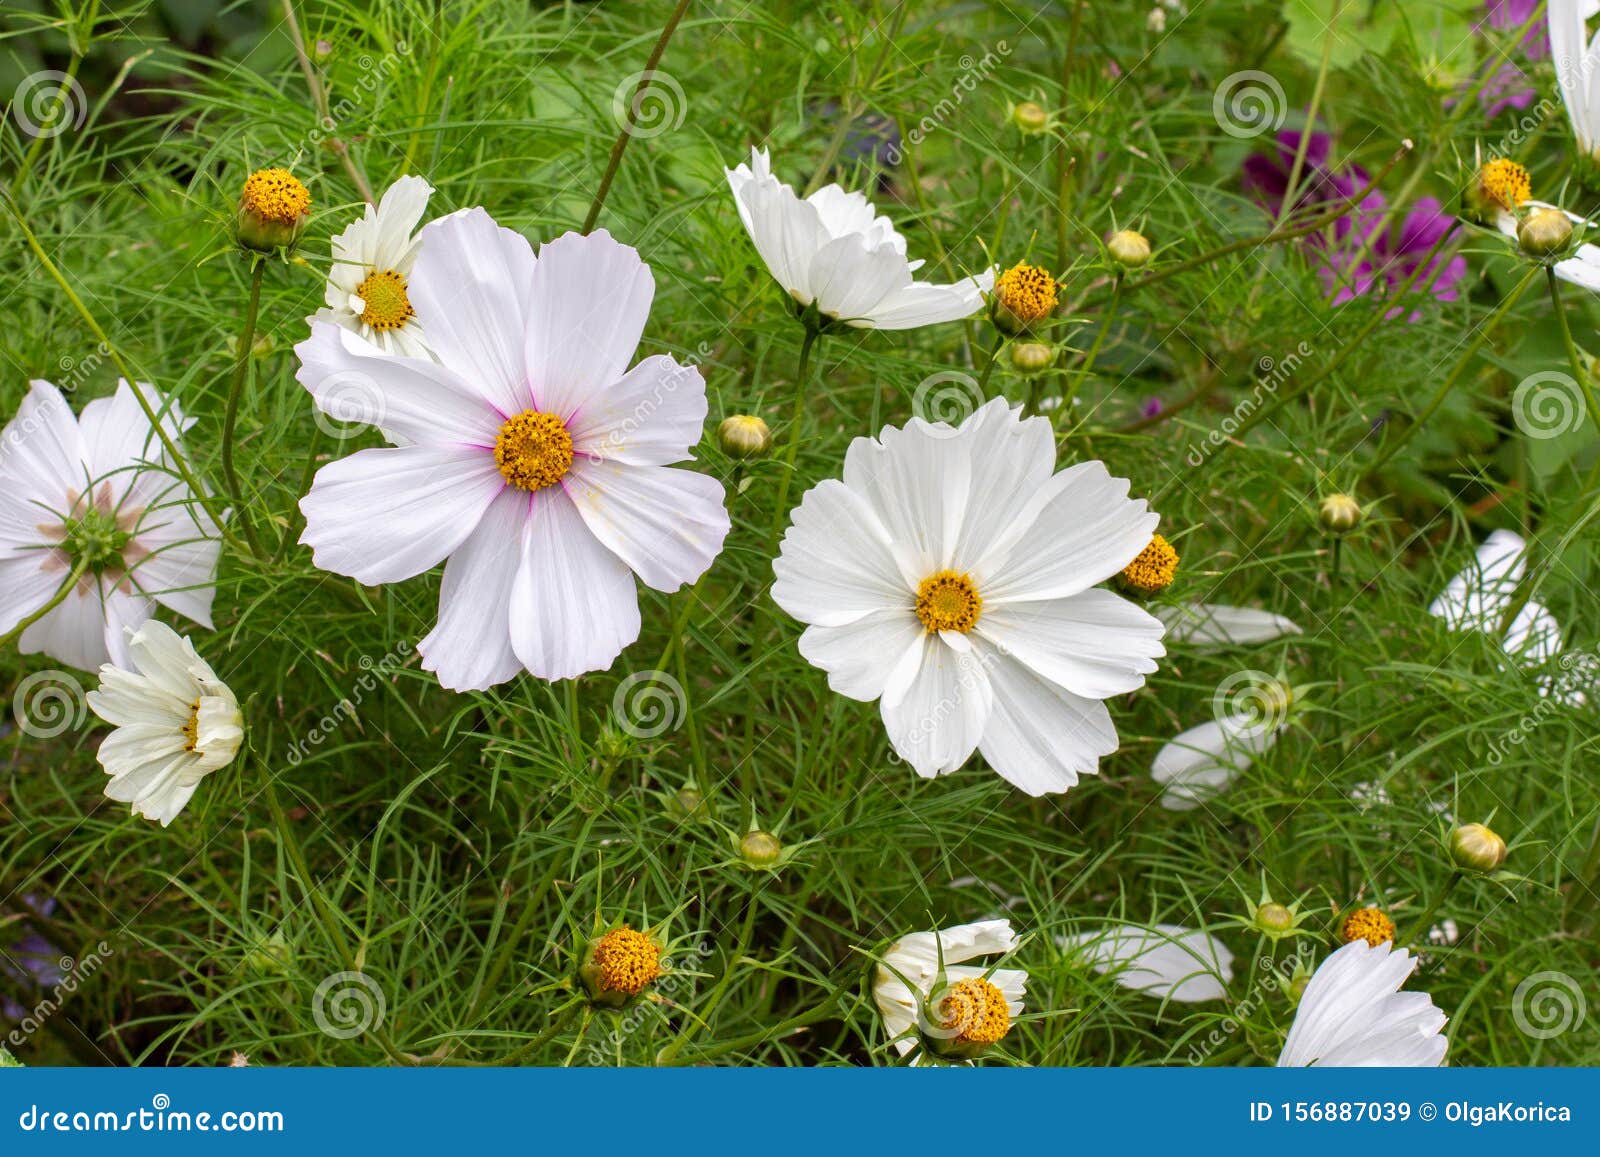 White Cosmos Bipinnatus Flowers In Nature Flower Decorative Garden Stock Image Image Of Landscape Flowerbed 156887039